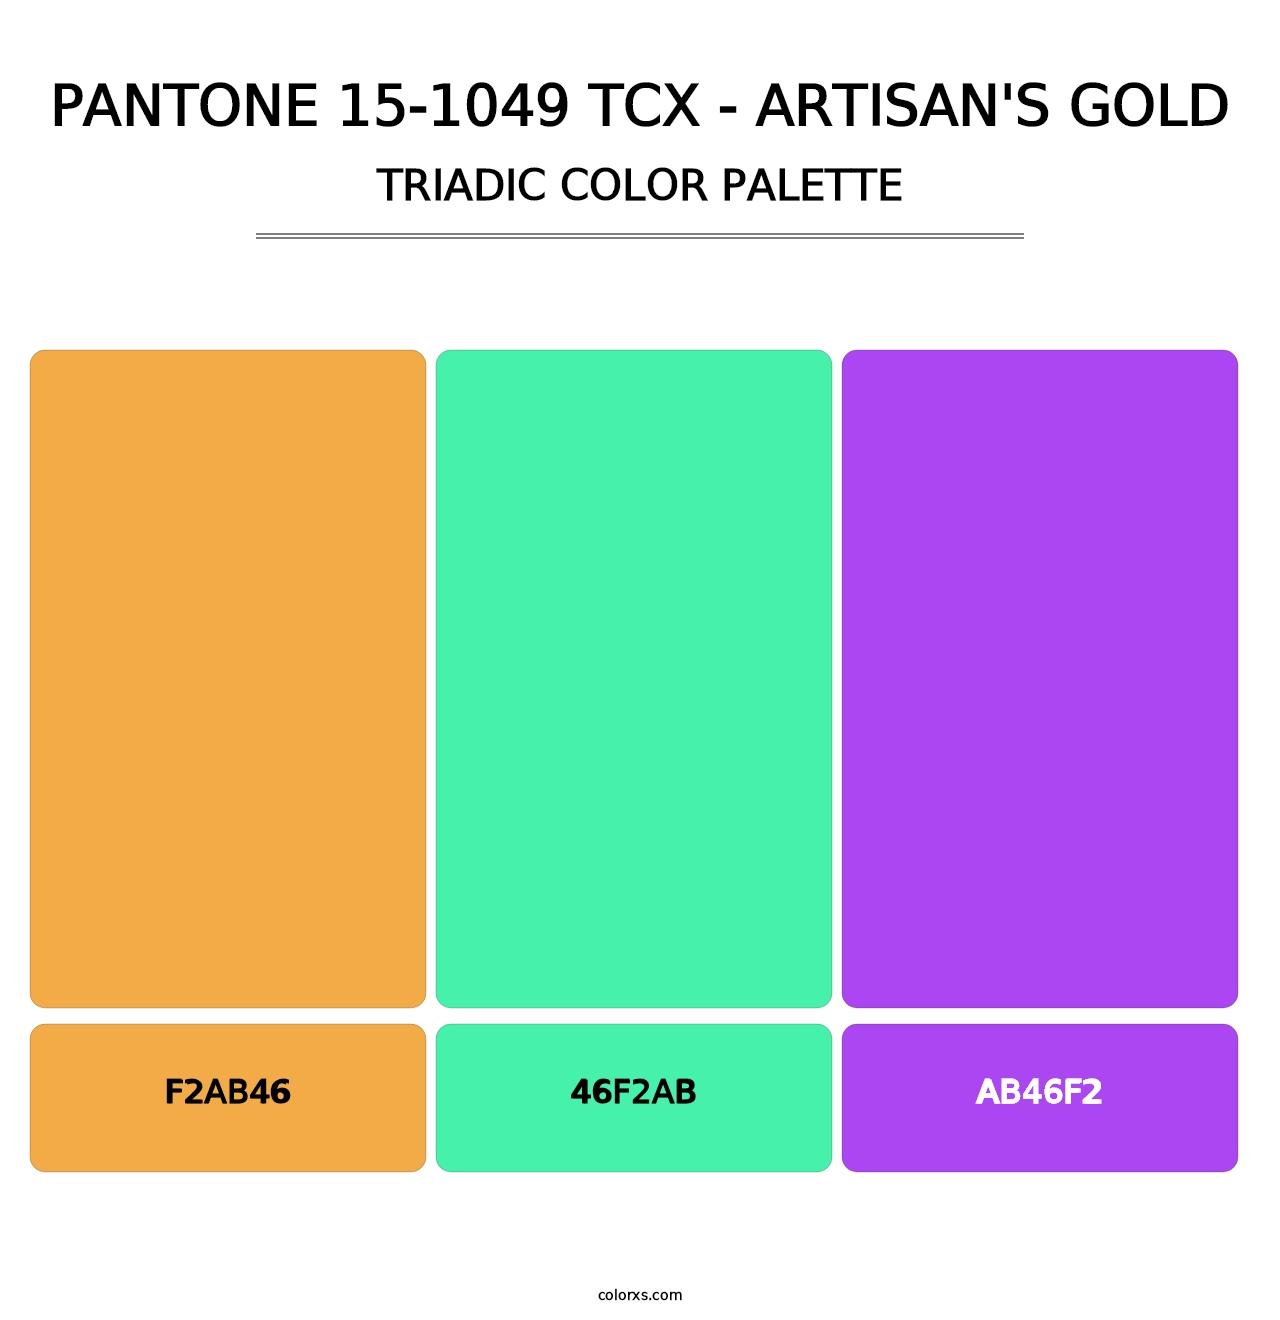 PANTONE 15-1049 TCX - Artisan's Gold - Triadic Color Palette